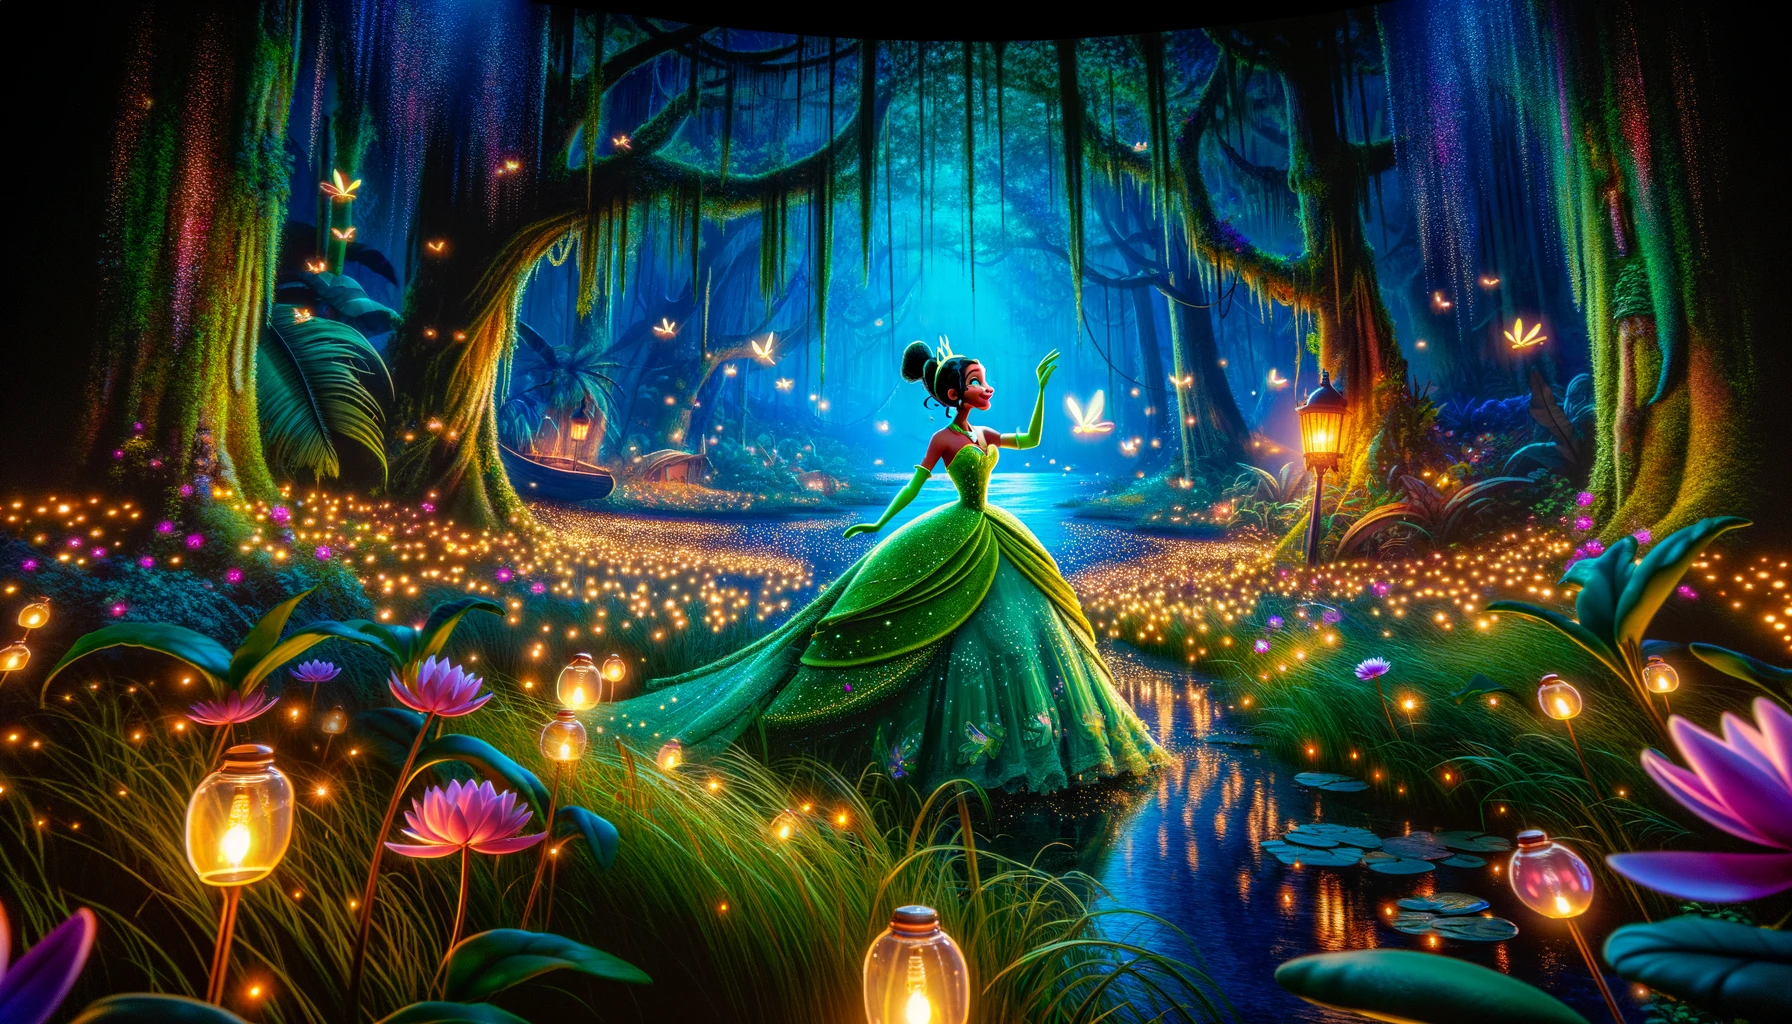 Princess Tiana and the Fireflies